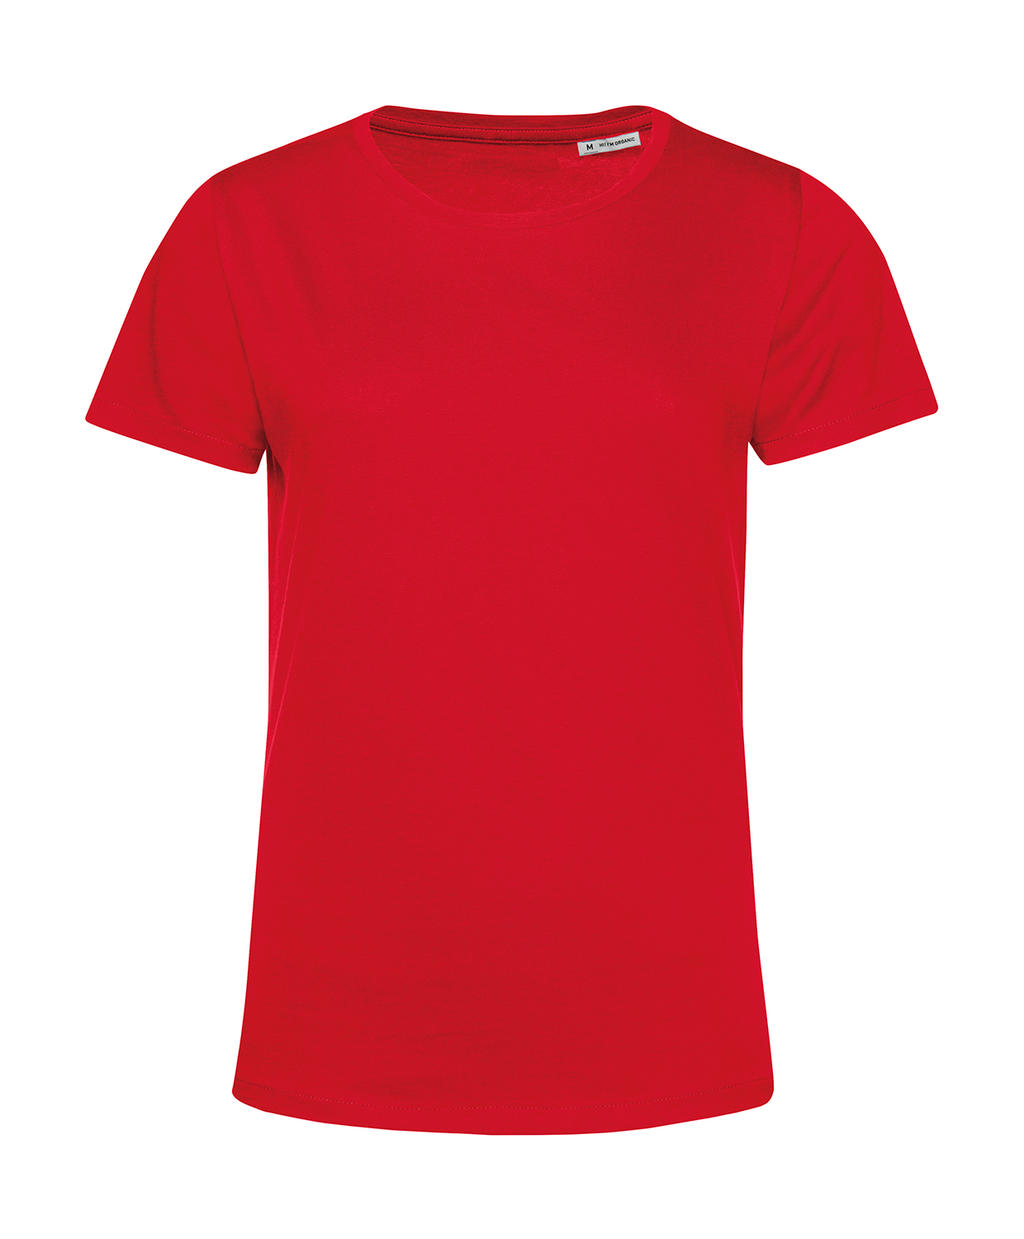 Tričko dámské BC Organic Inspire E150 - červené, XXL